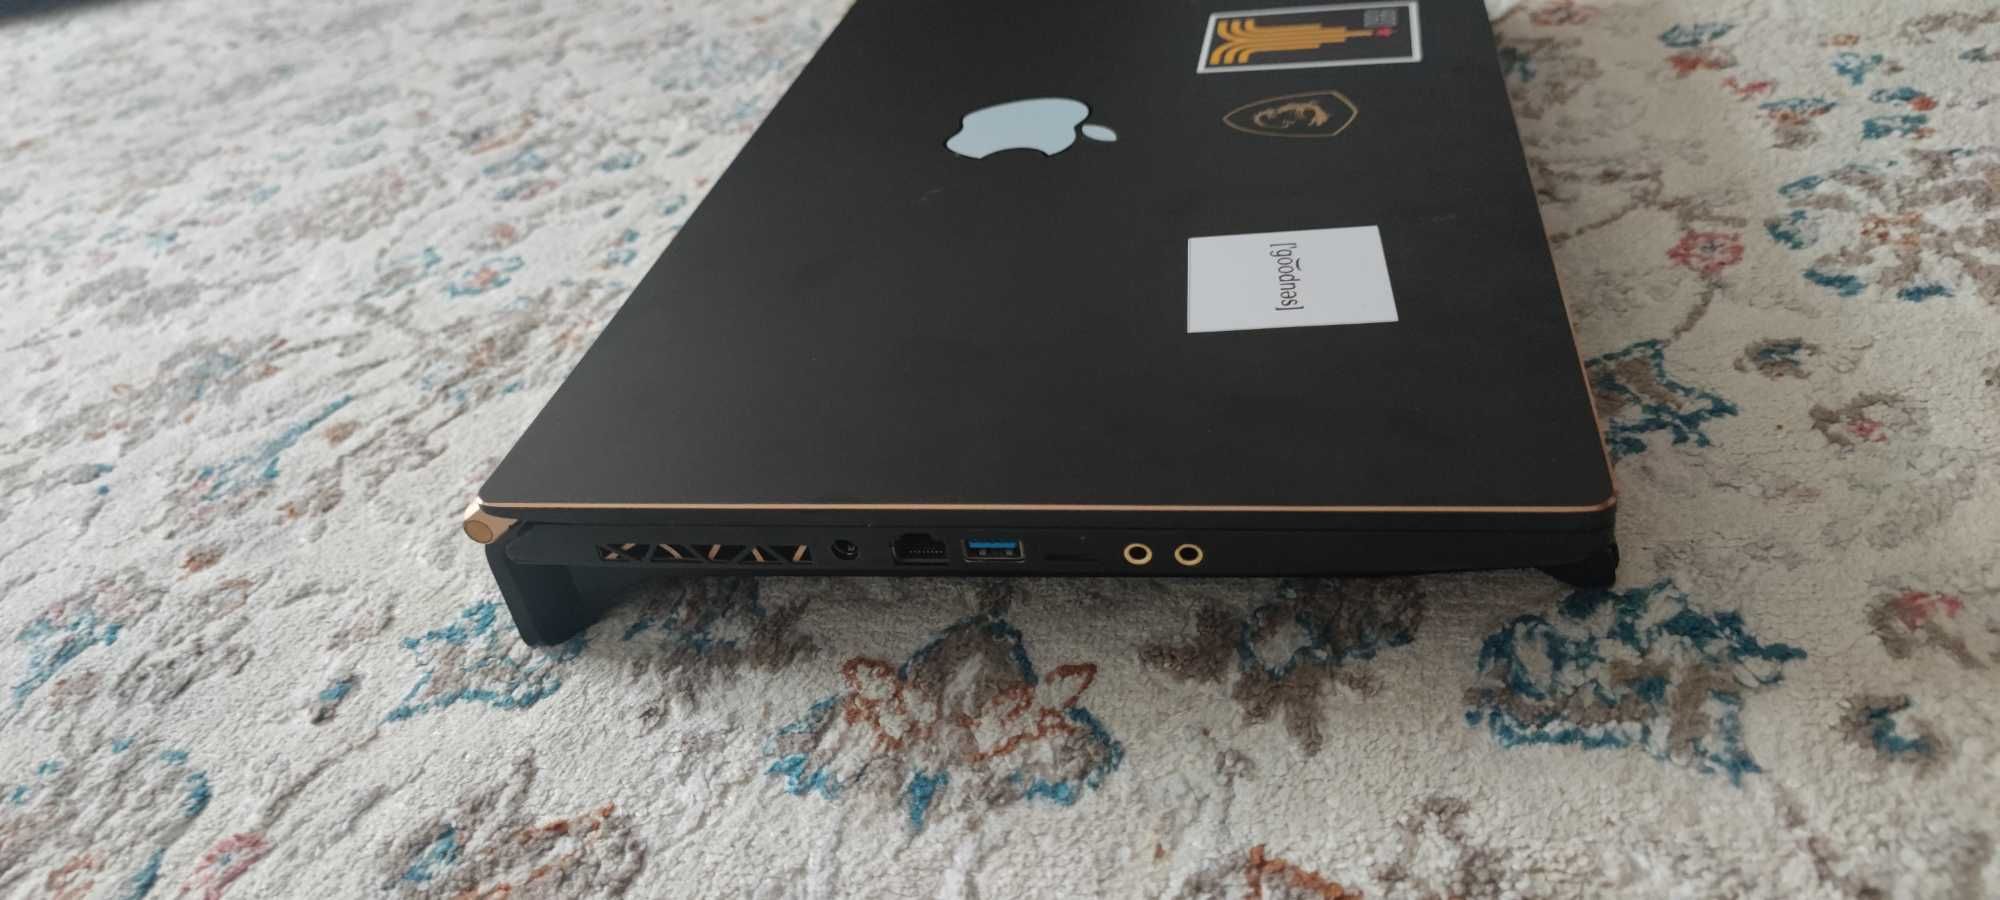 Msi GS75 Stealth  rtx 2080 core i7 игровой ноутбук 17.3  144ghz